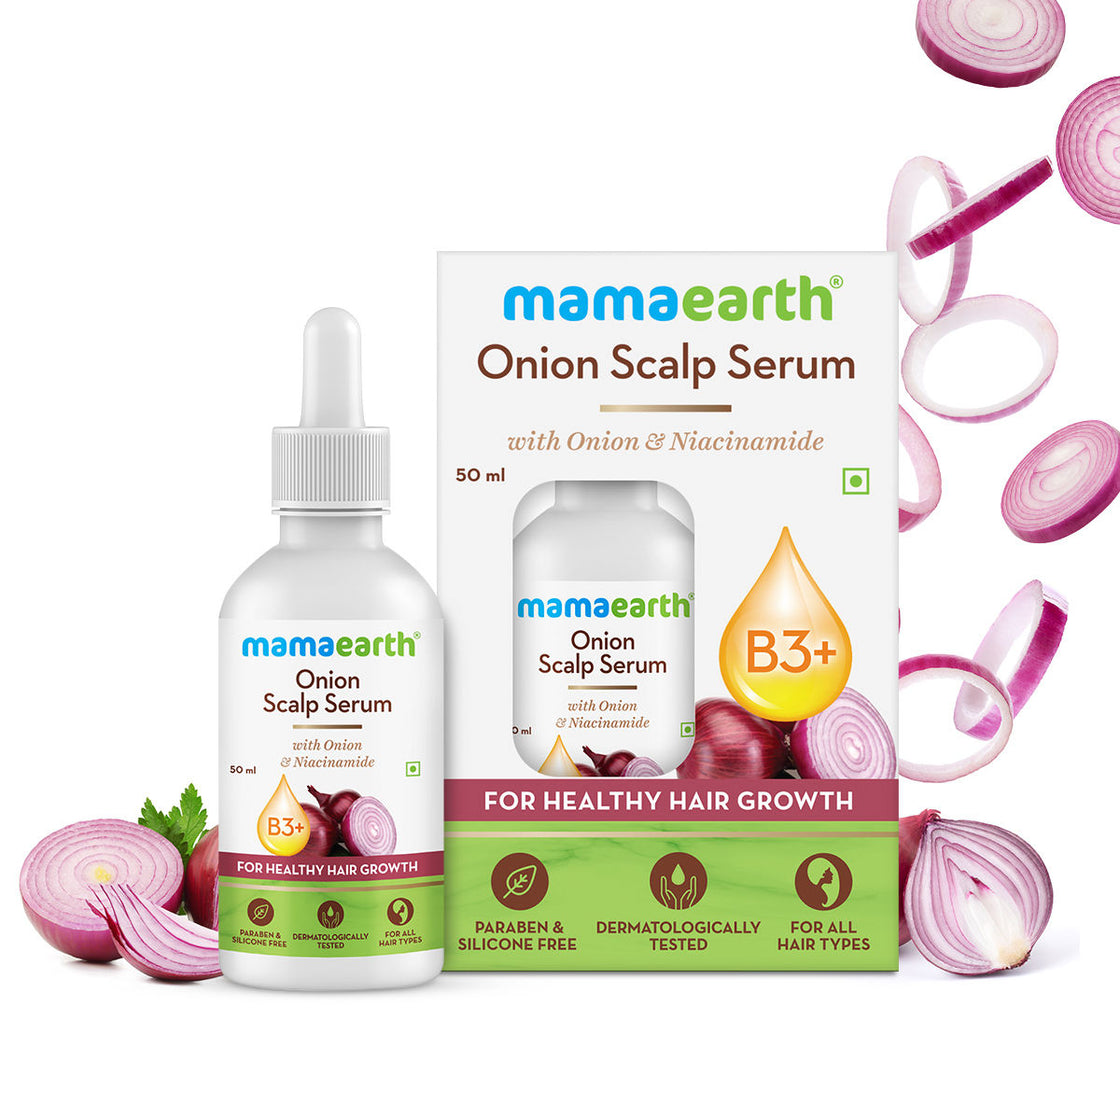 Mamaearth Onion Scalp Serum With Onion & Biotin For Healthy Hair Growth